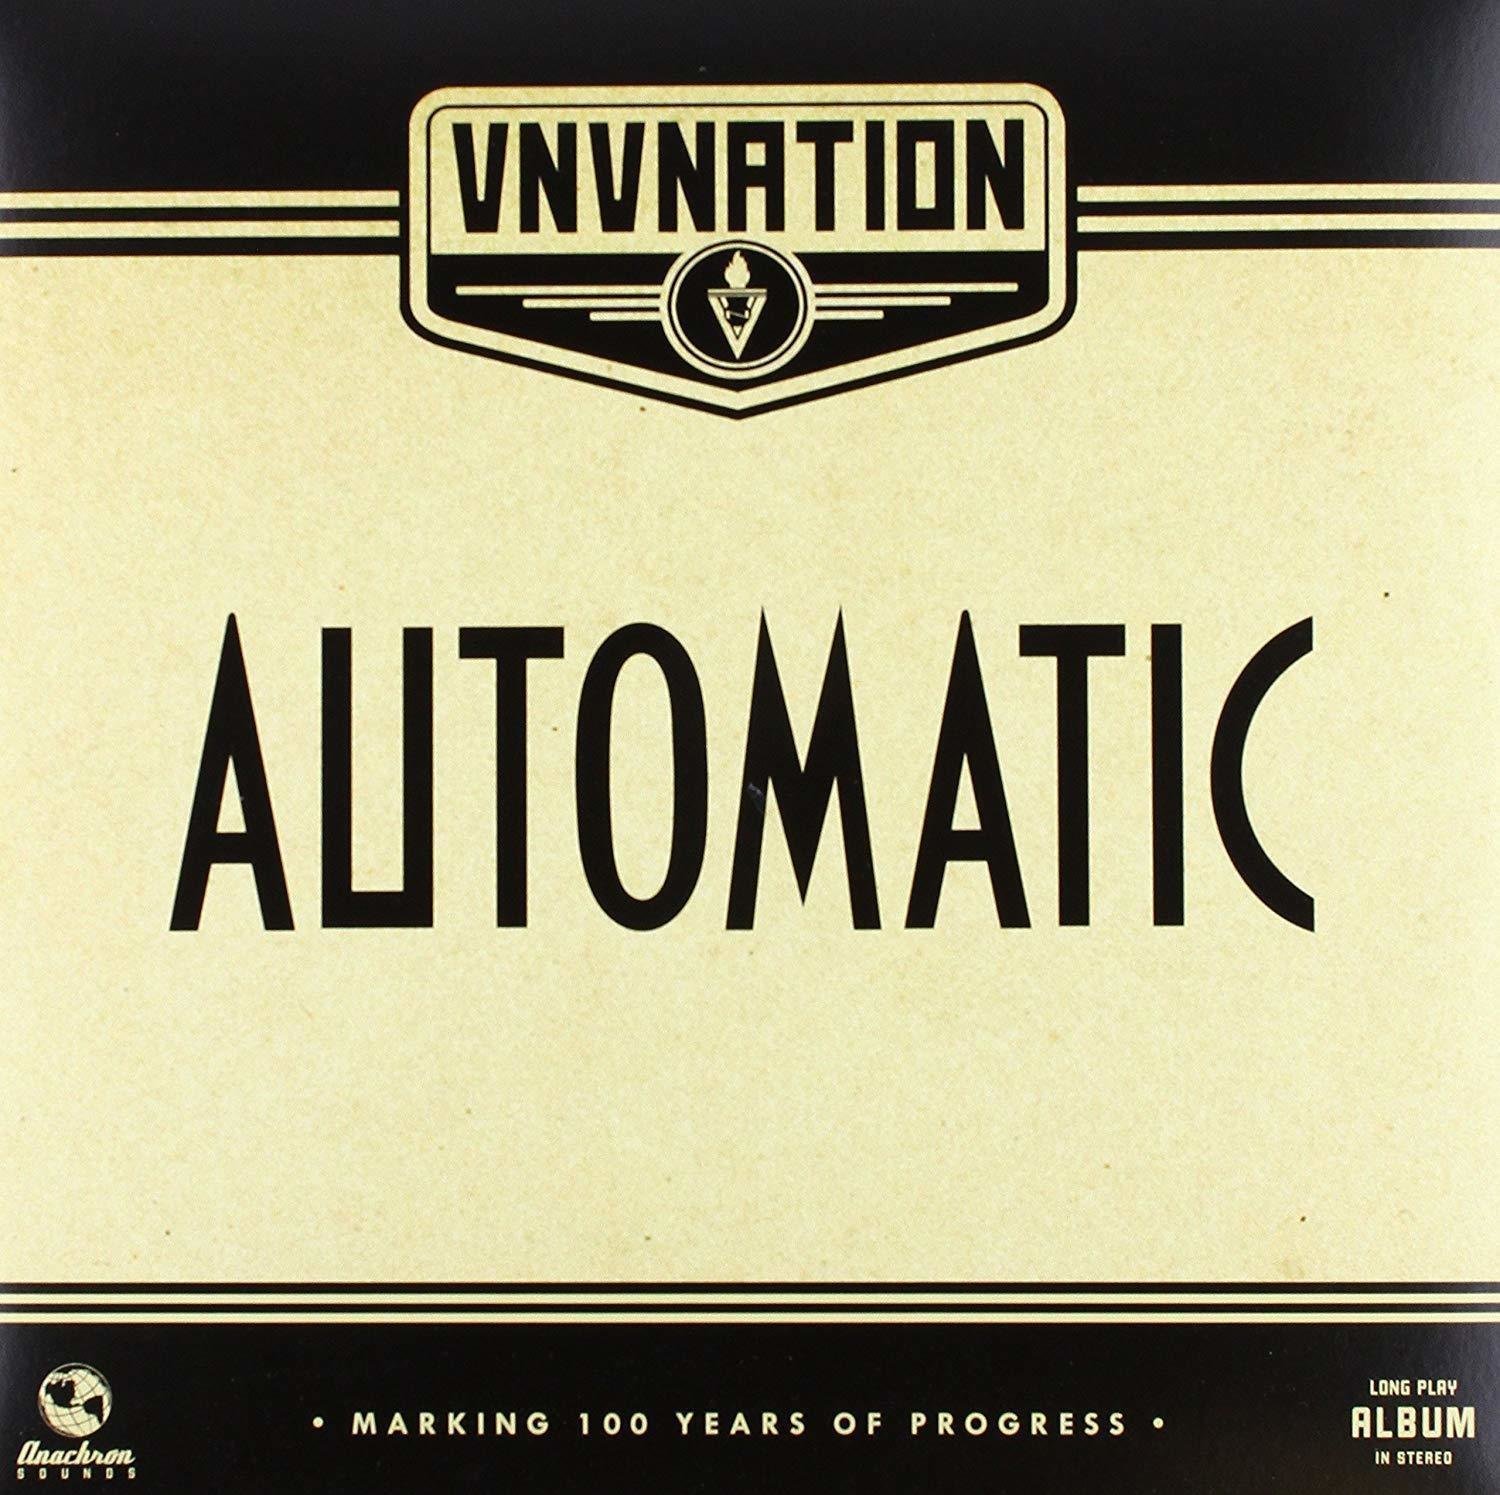 Vinyl Record Vnv Nation - Automatic (2 LP)